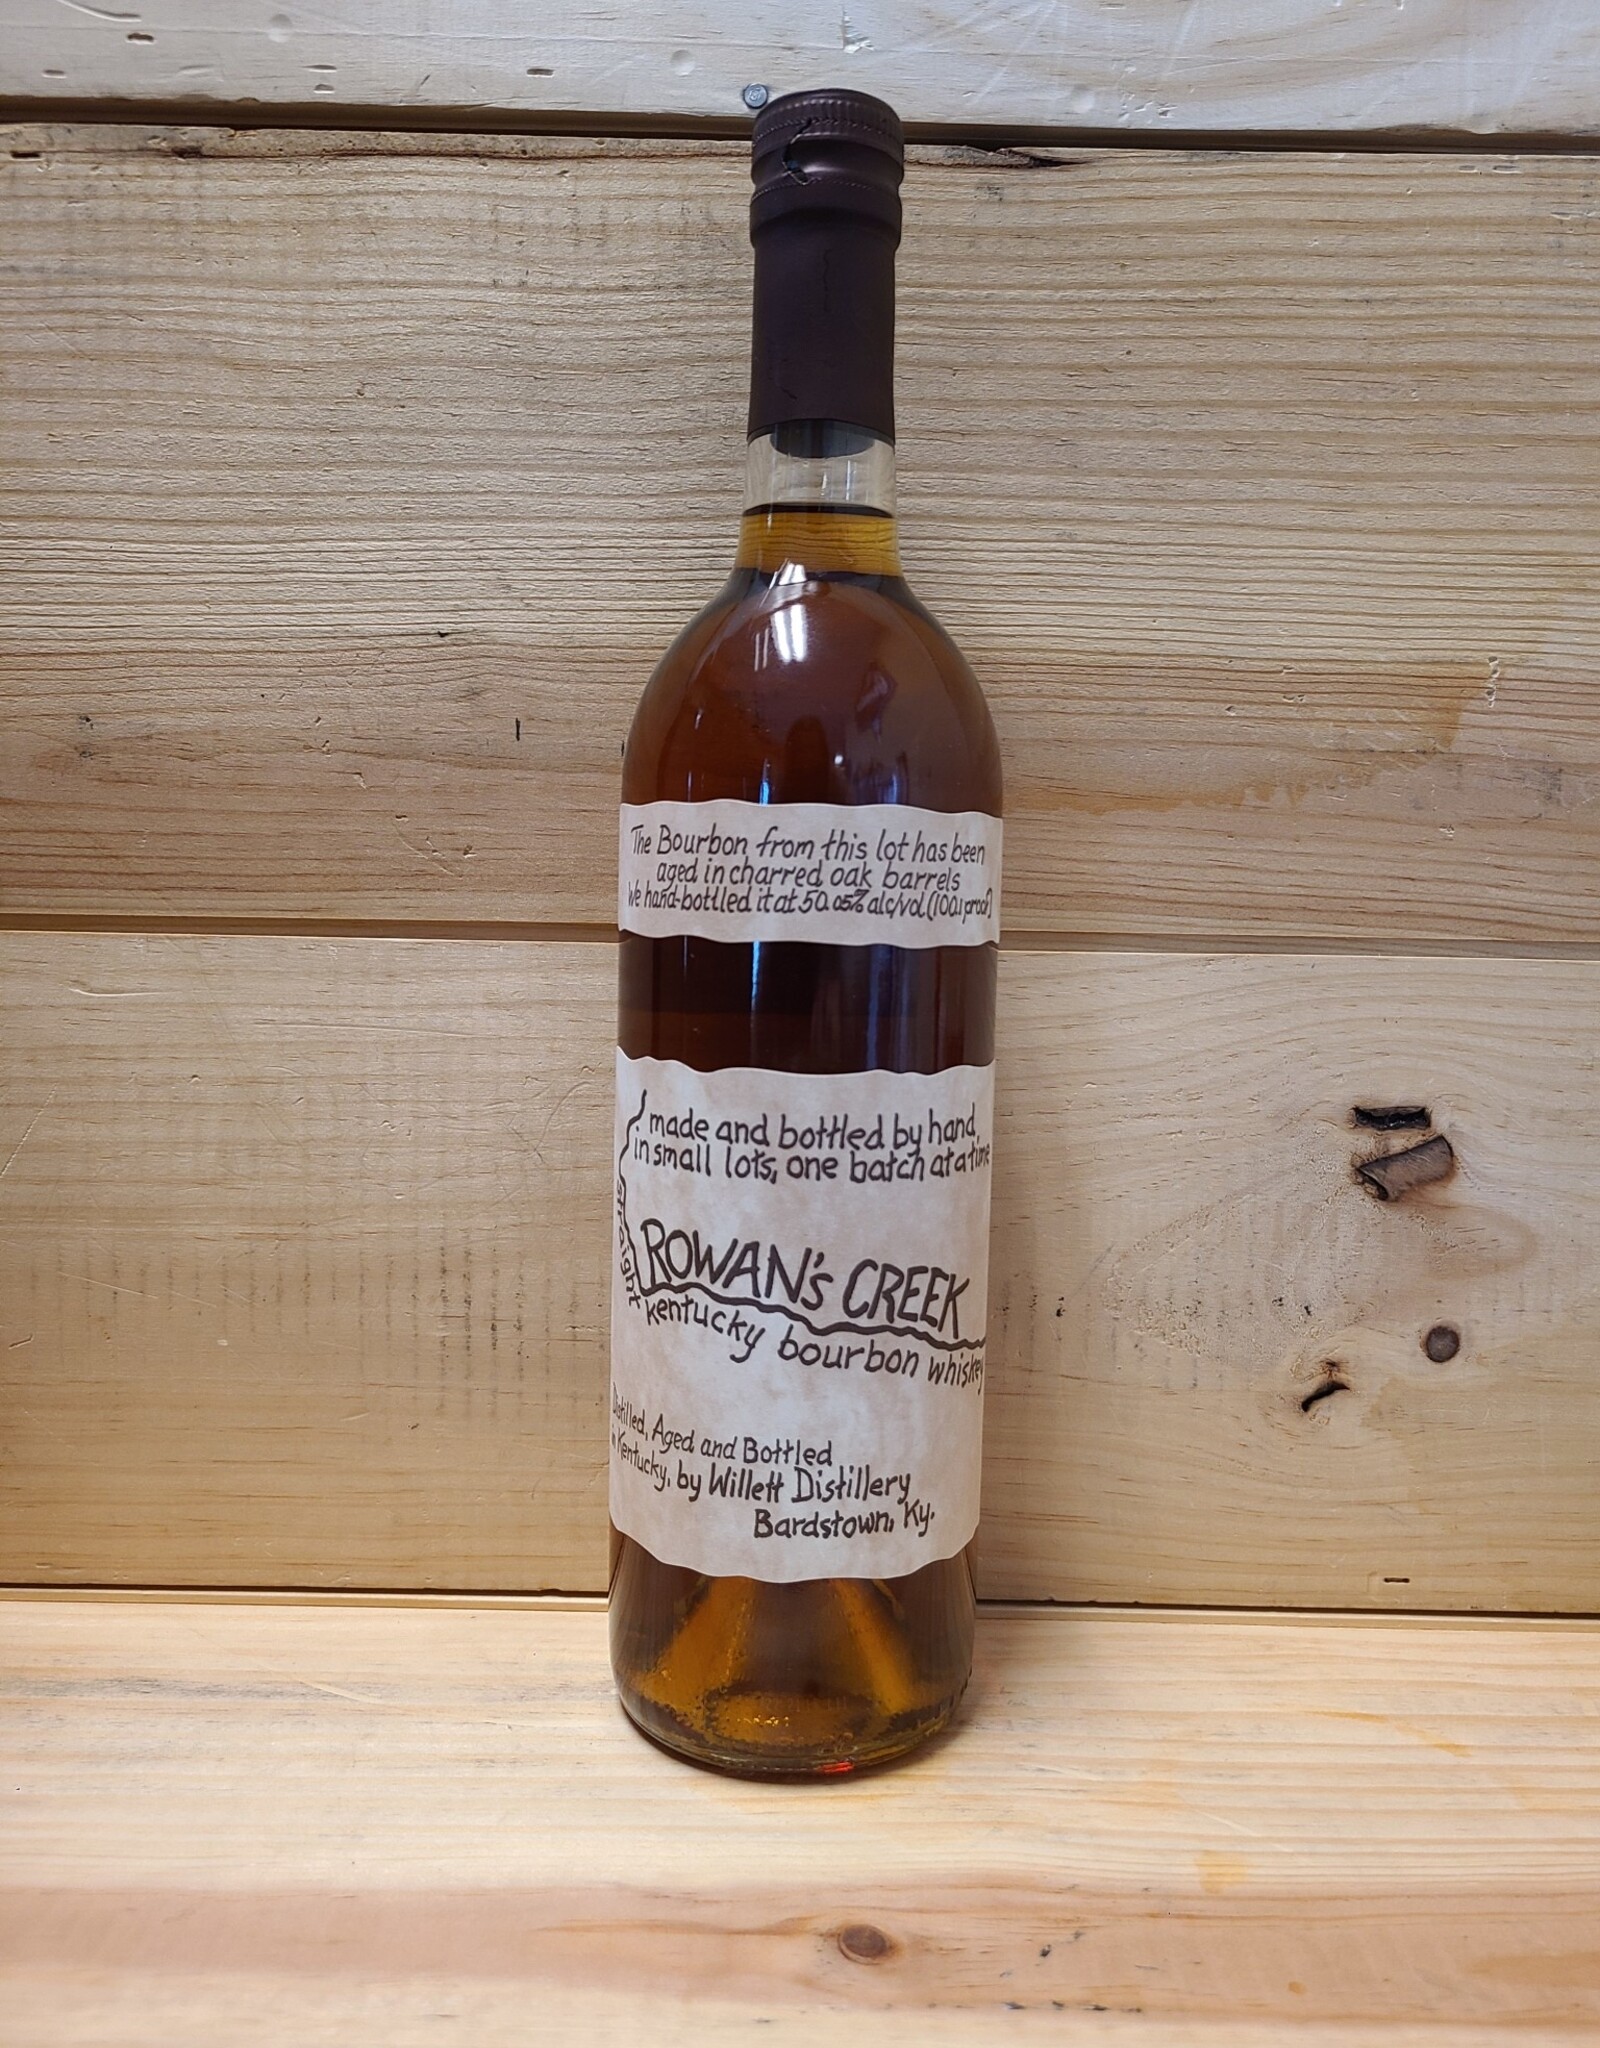 Willet Rowan's Creek Kentucky Straight Bourbon Whiskey